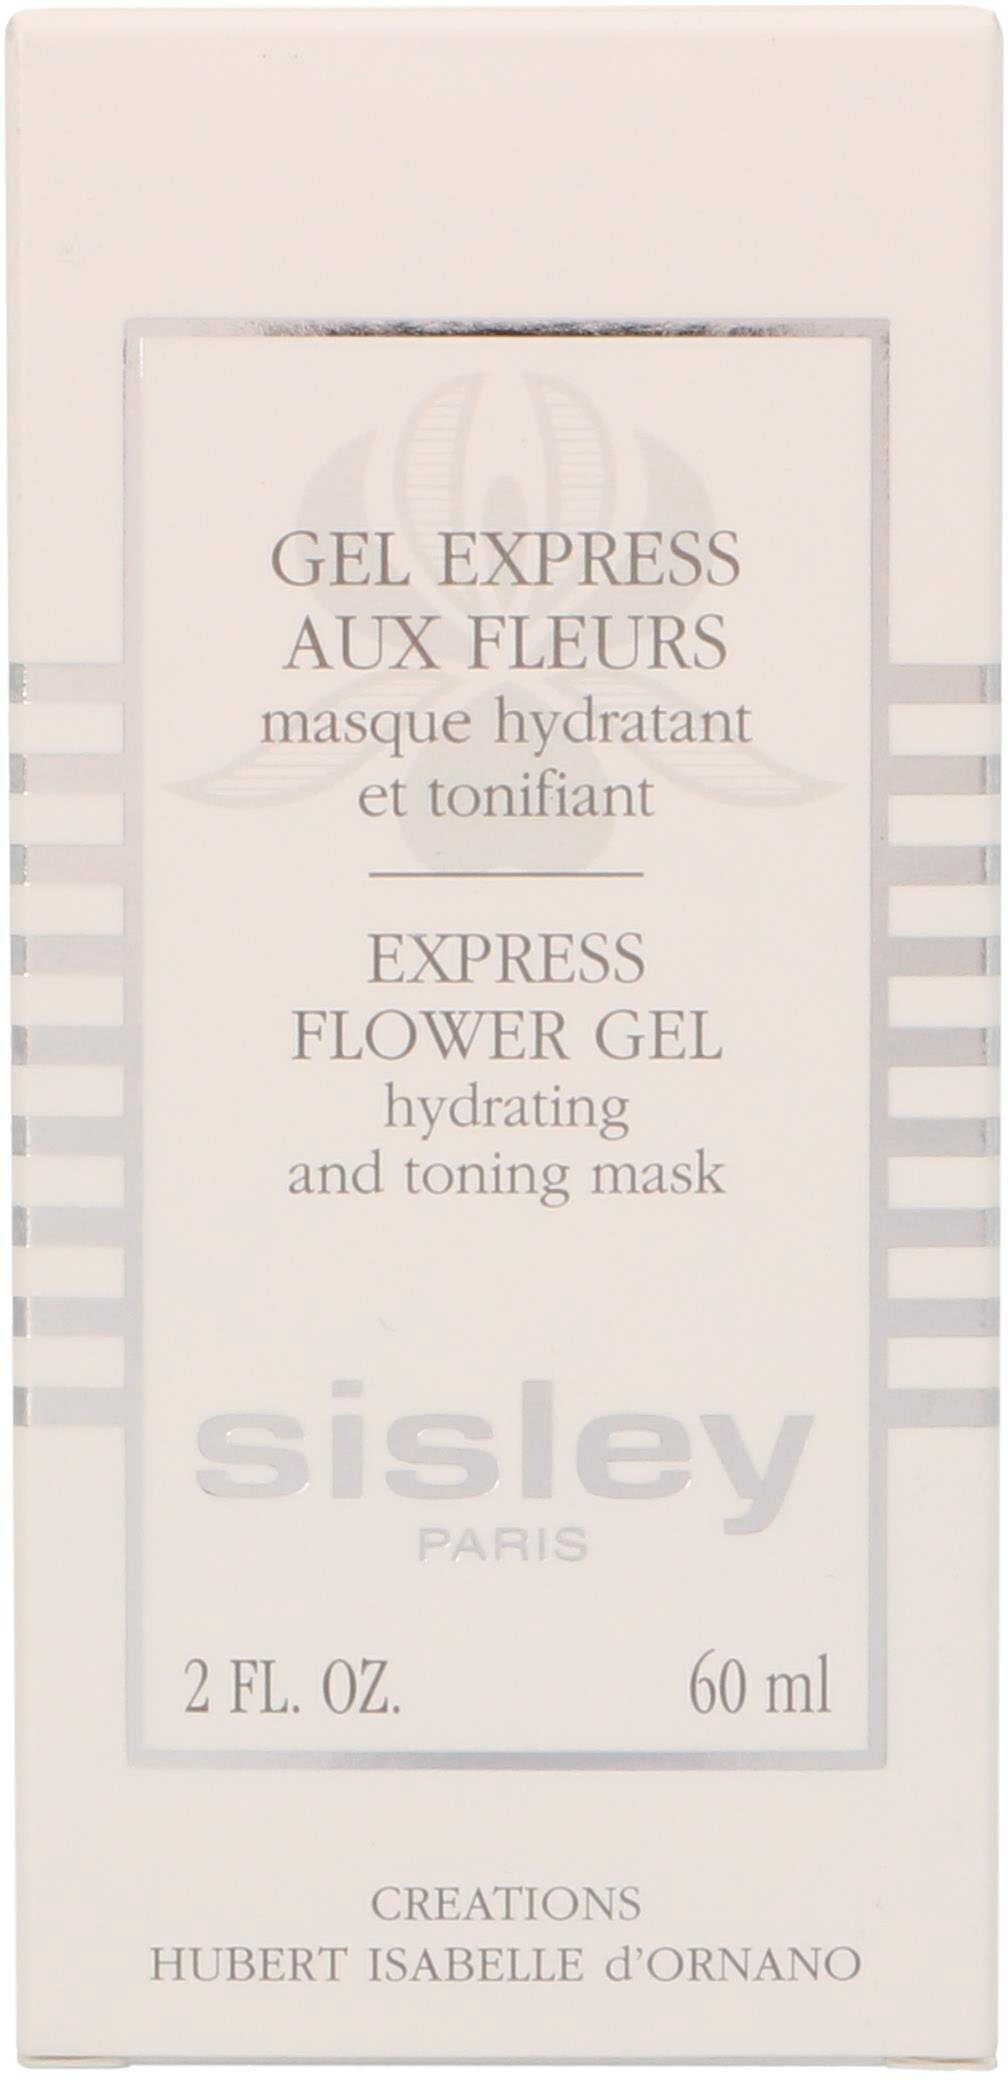 Gel Gesichtsgel Flower sisley Express